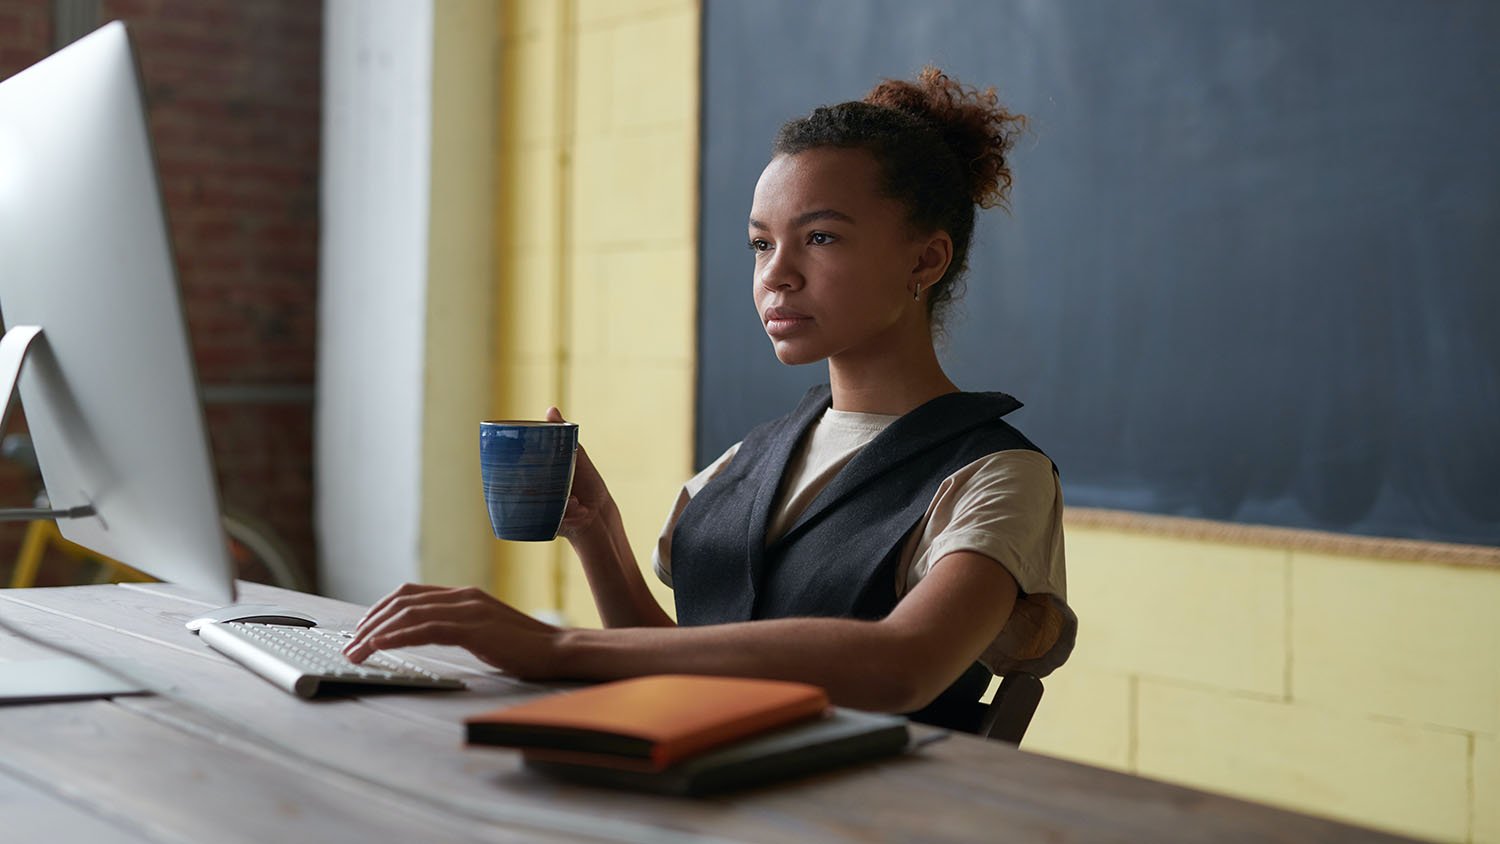 Woman sitting at computer holding coffee mug